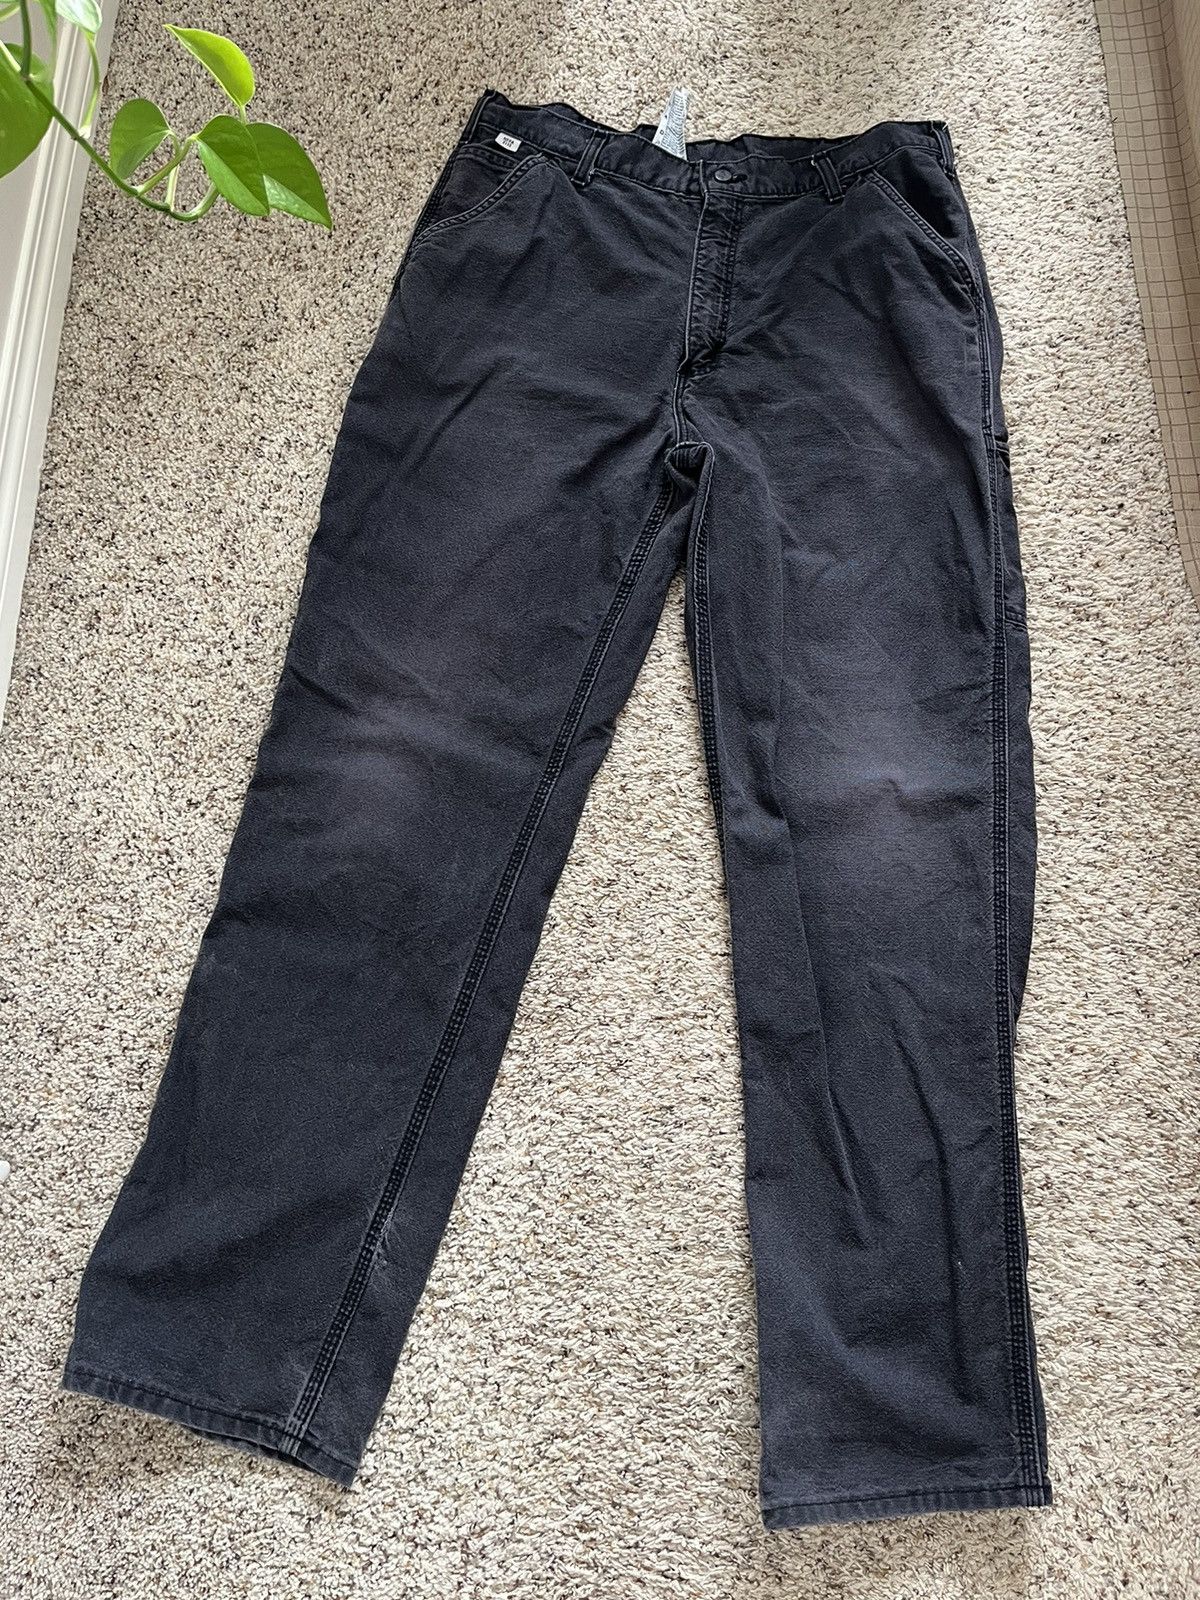 Vintage Vintage Faded Black Carhartt Carpenter Pants Size US 36 / EU 52 - 3 Thumbnail